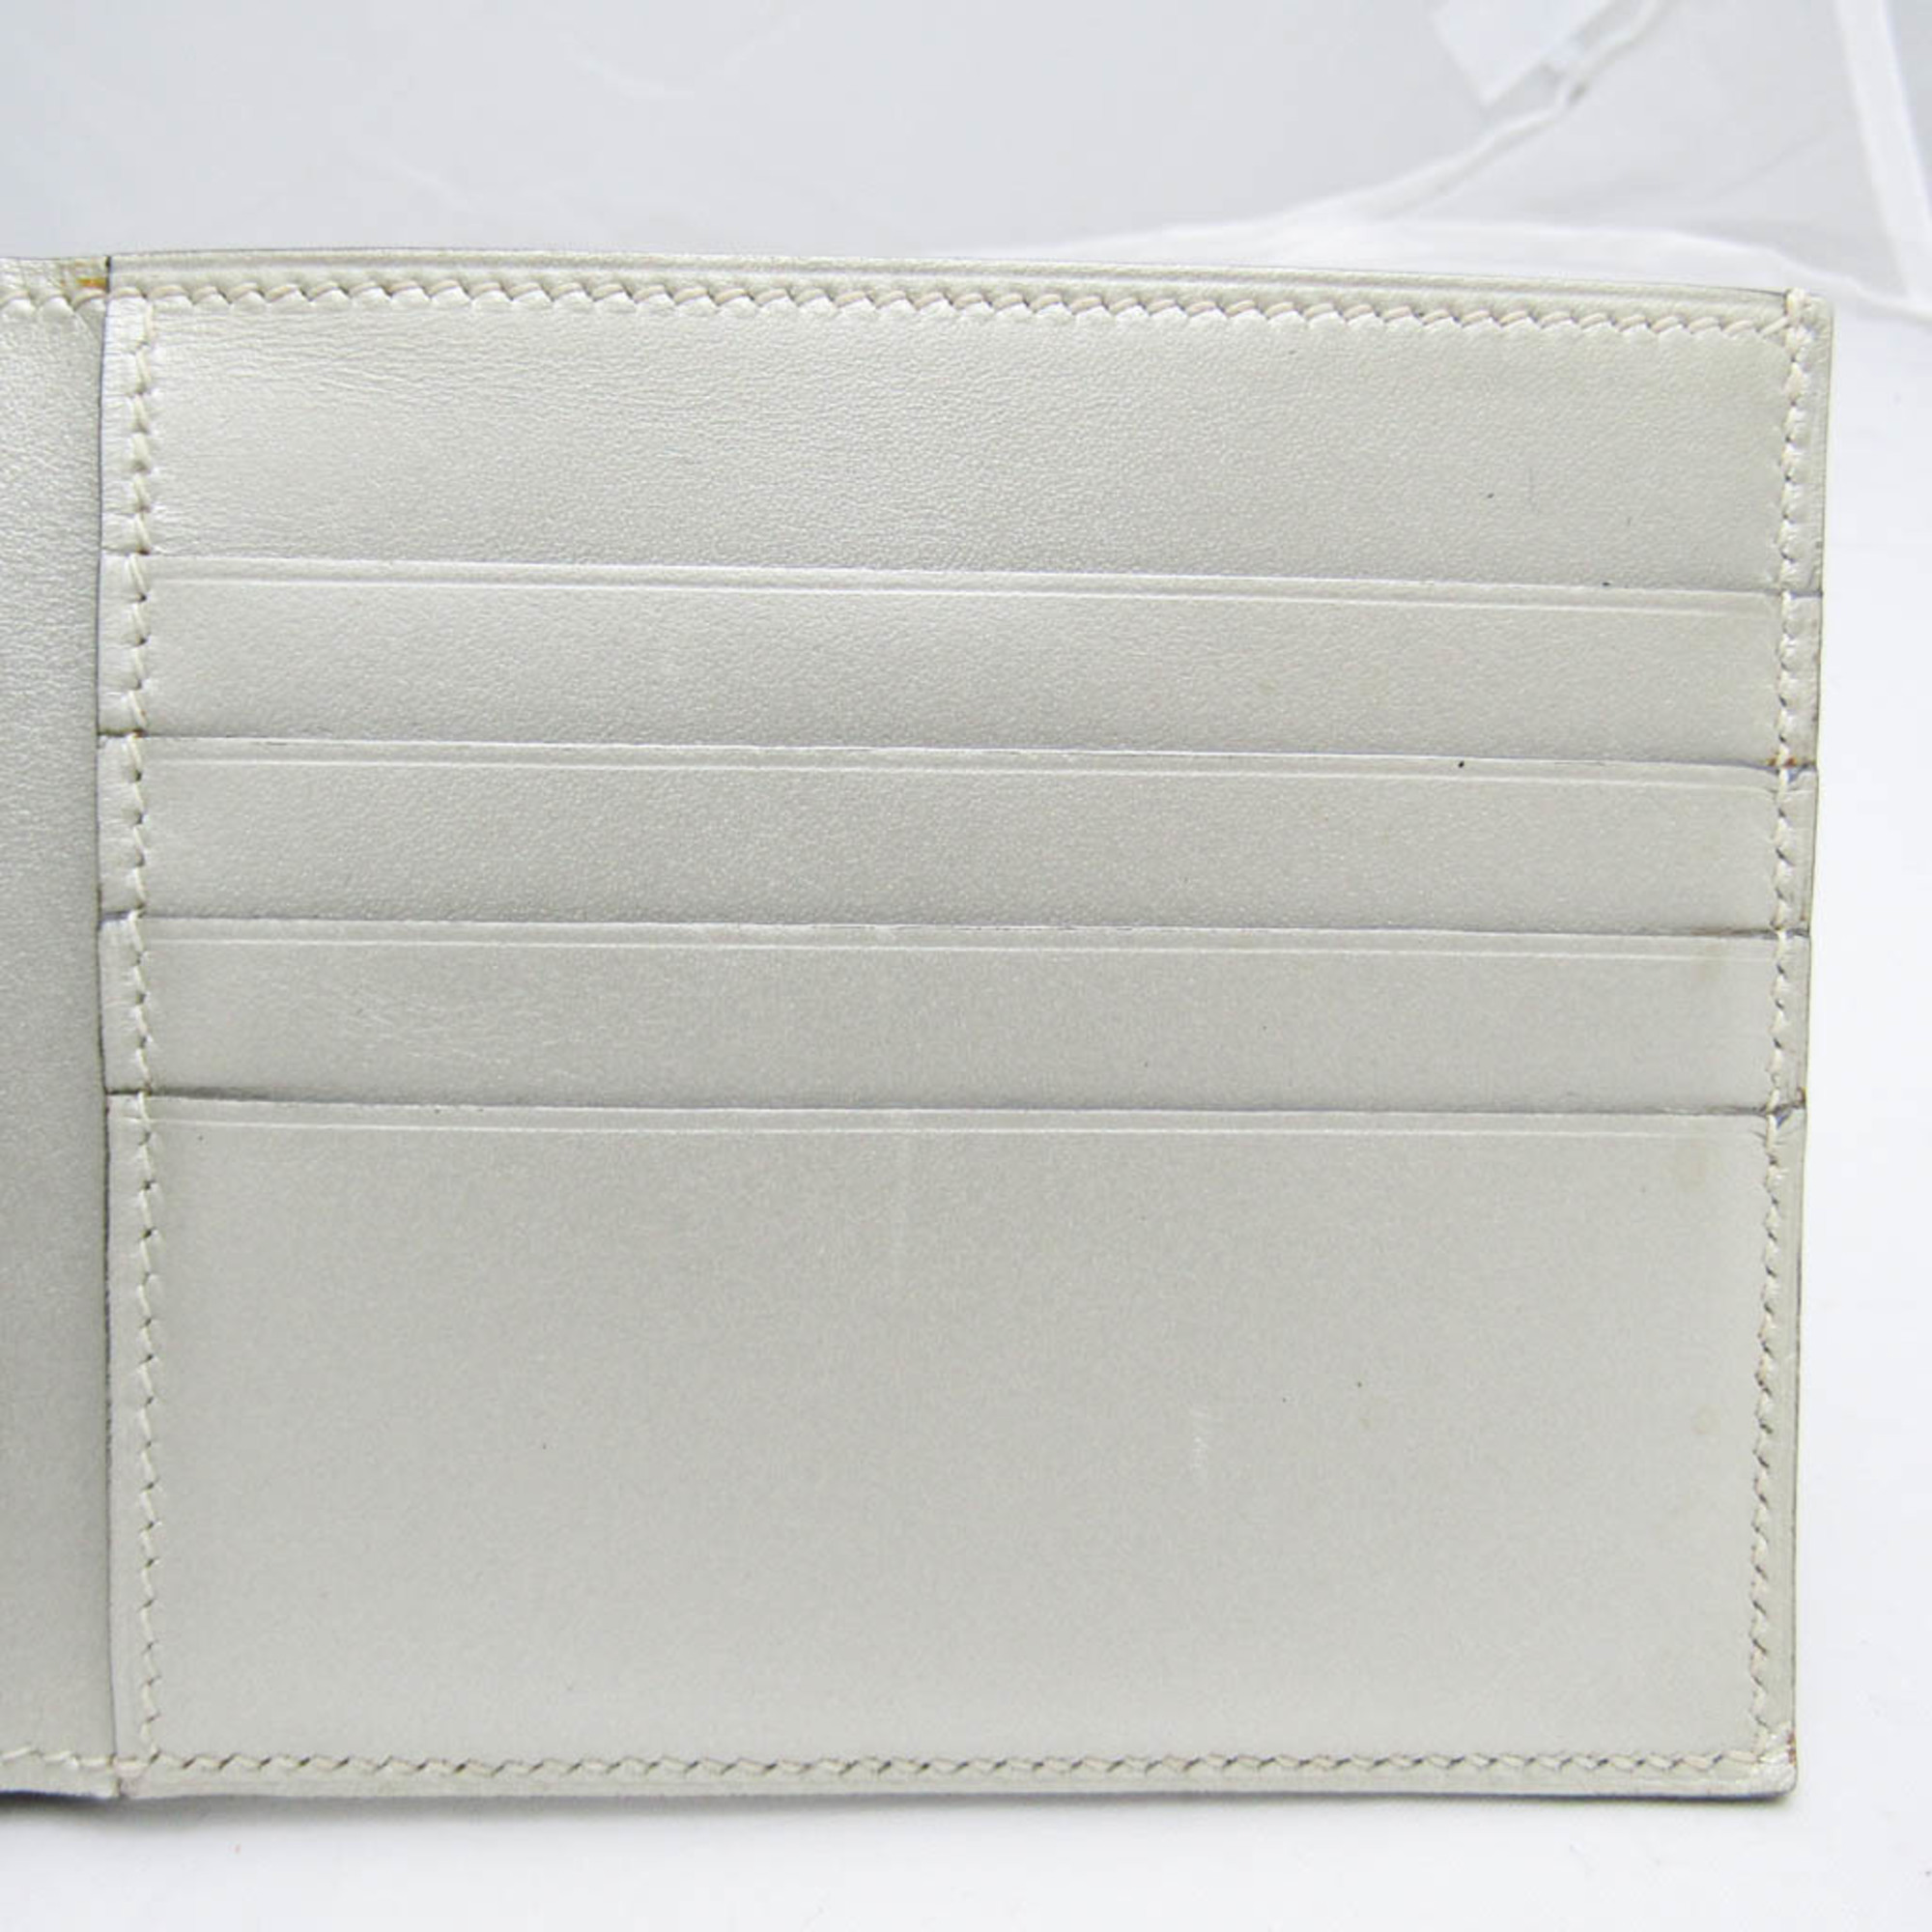 Hermes MC2 Copernicus Men,Women Box Calf Leather Bill Wallet (bi-fold) Off-white